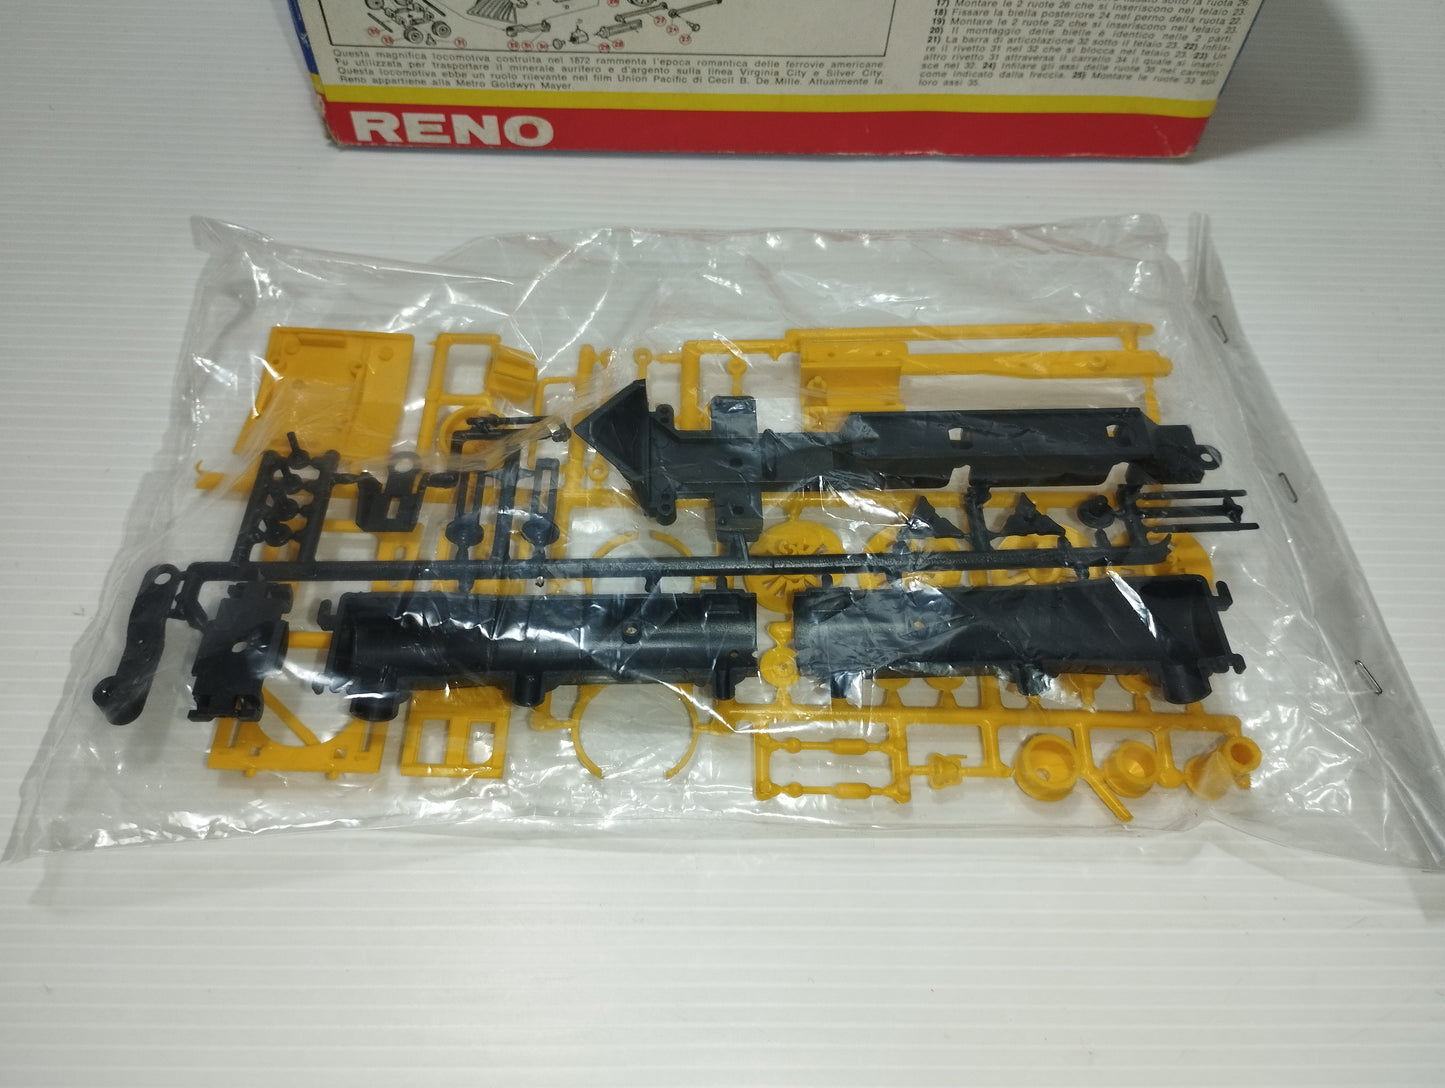 Locomotiva Reno

Gadget Pavesi Anni 70/80

Kit in Plastica